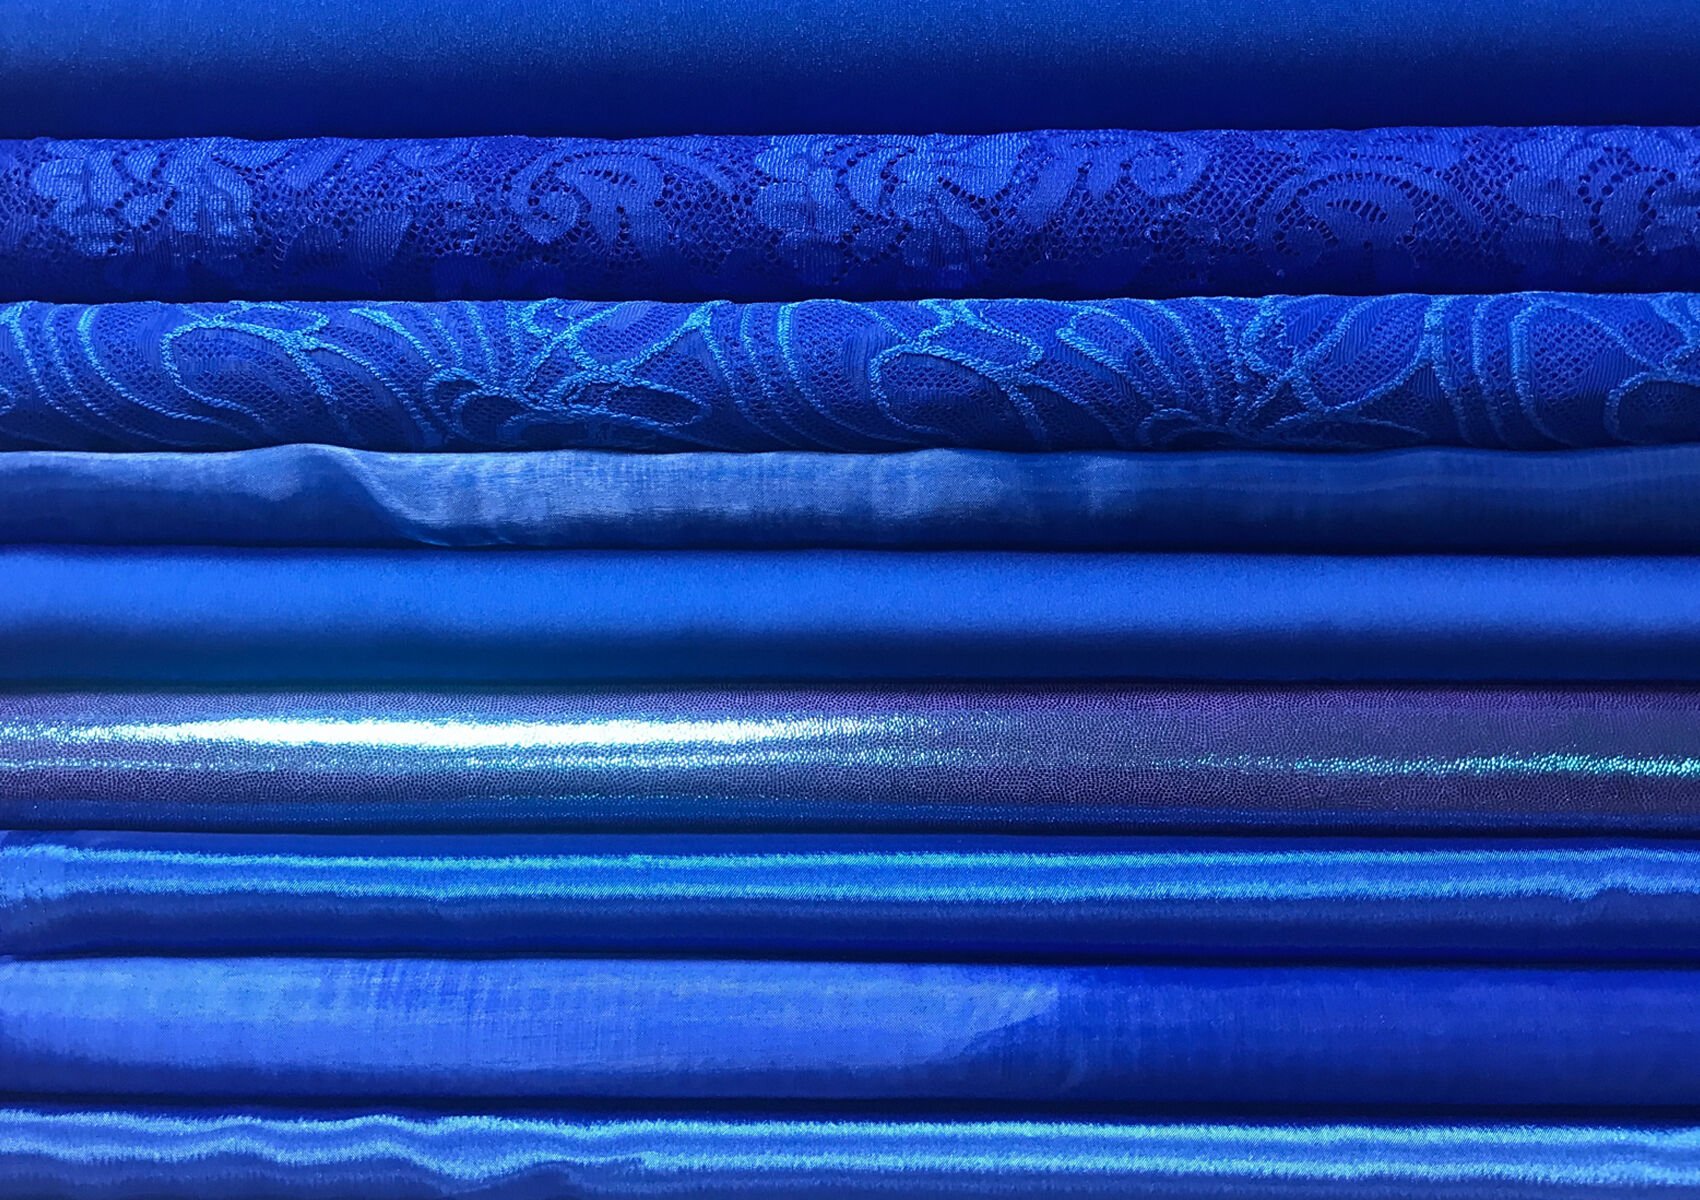 Cobalt blue colour couture fabric